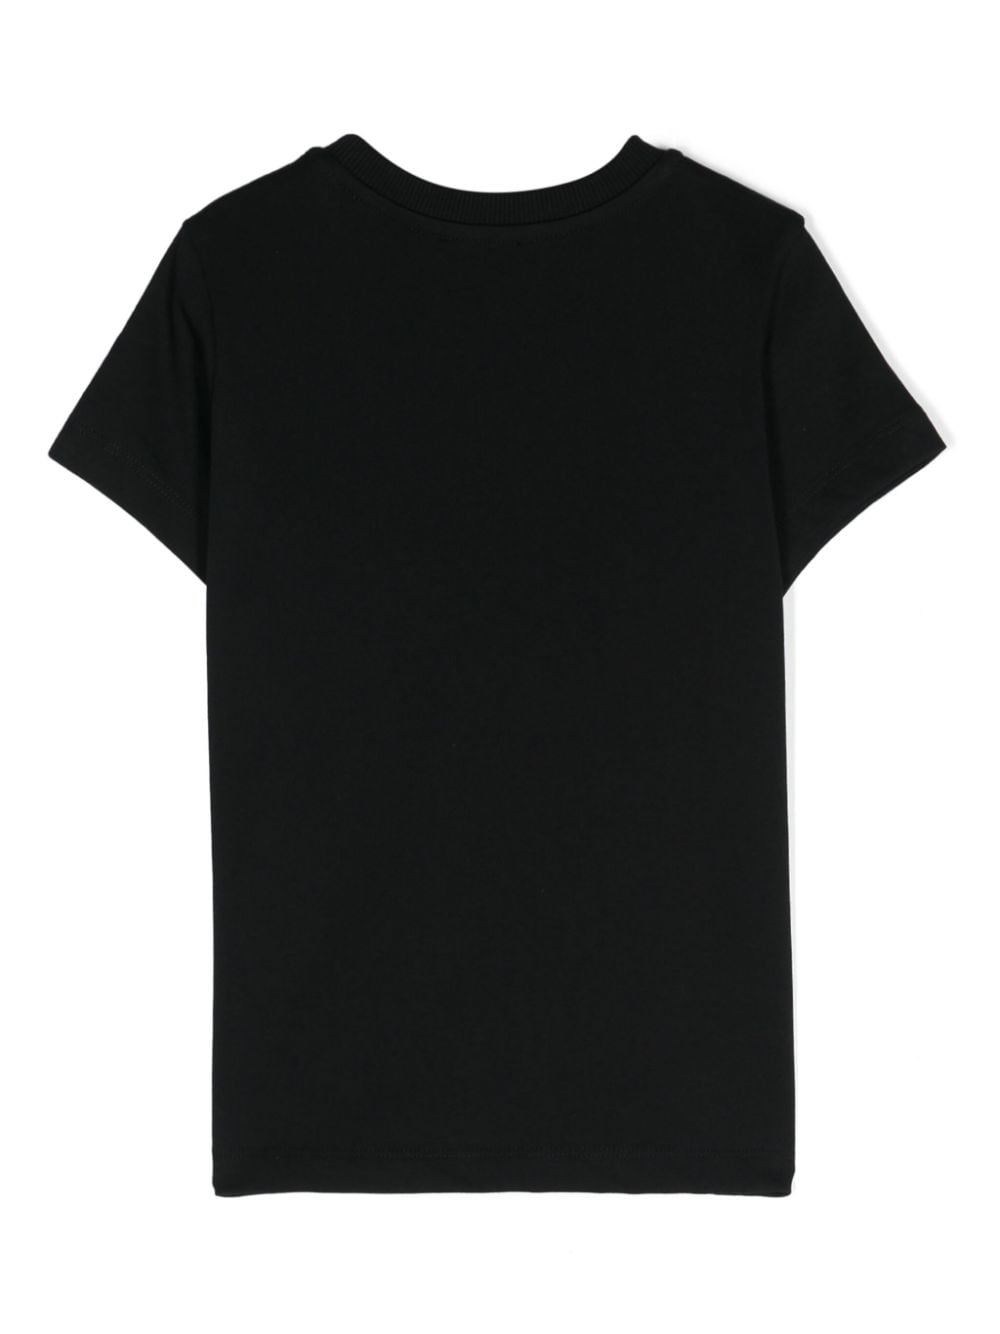 T-shirt unisex in cotone nera con stampa